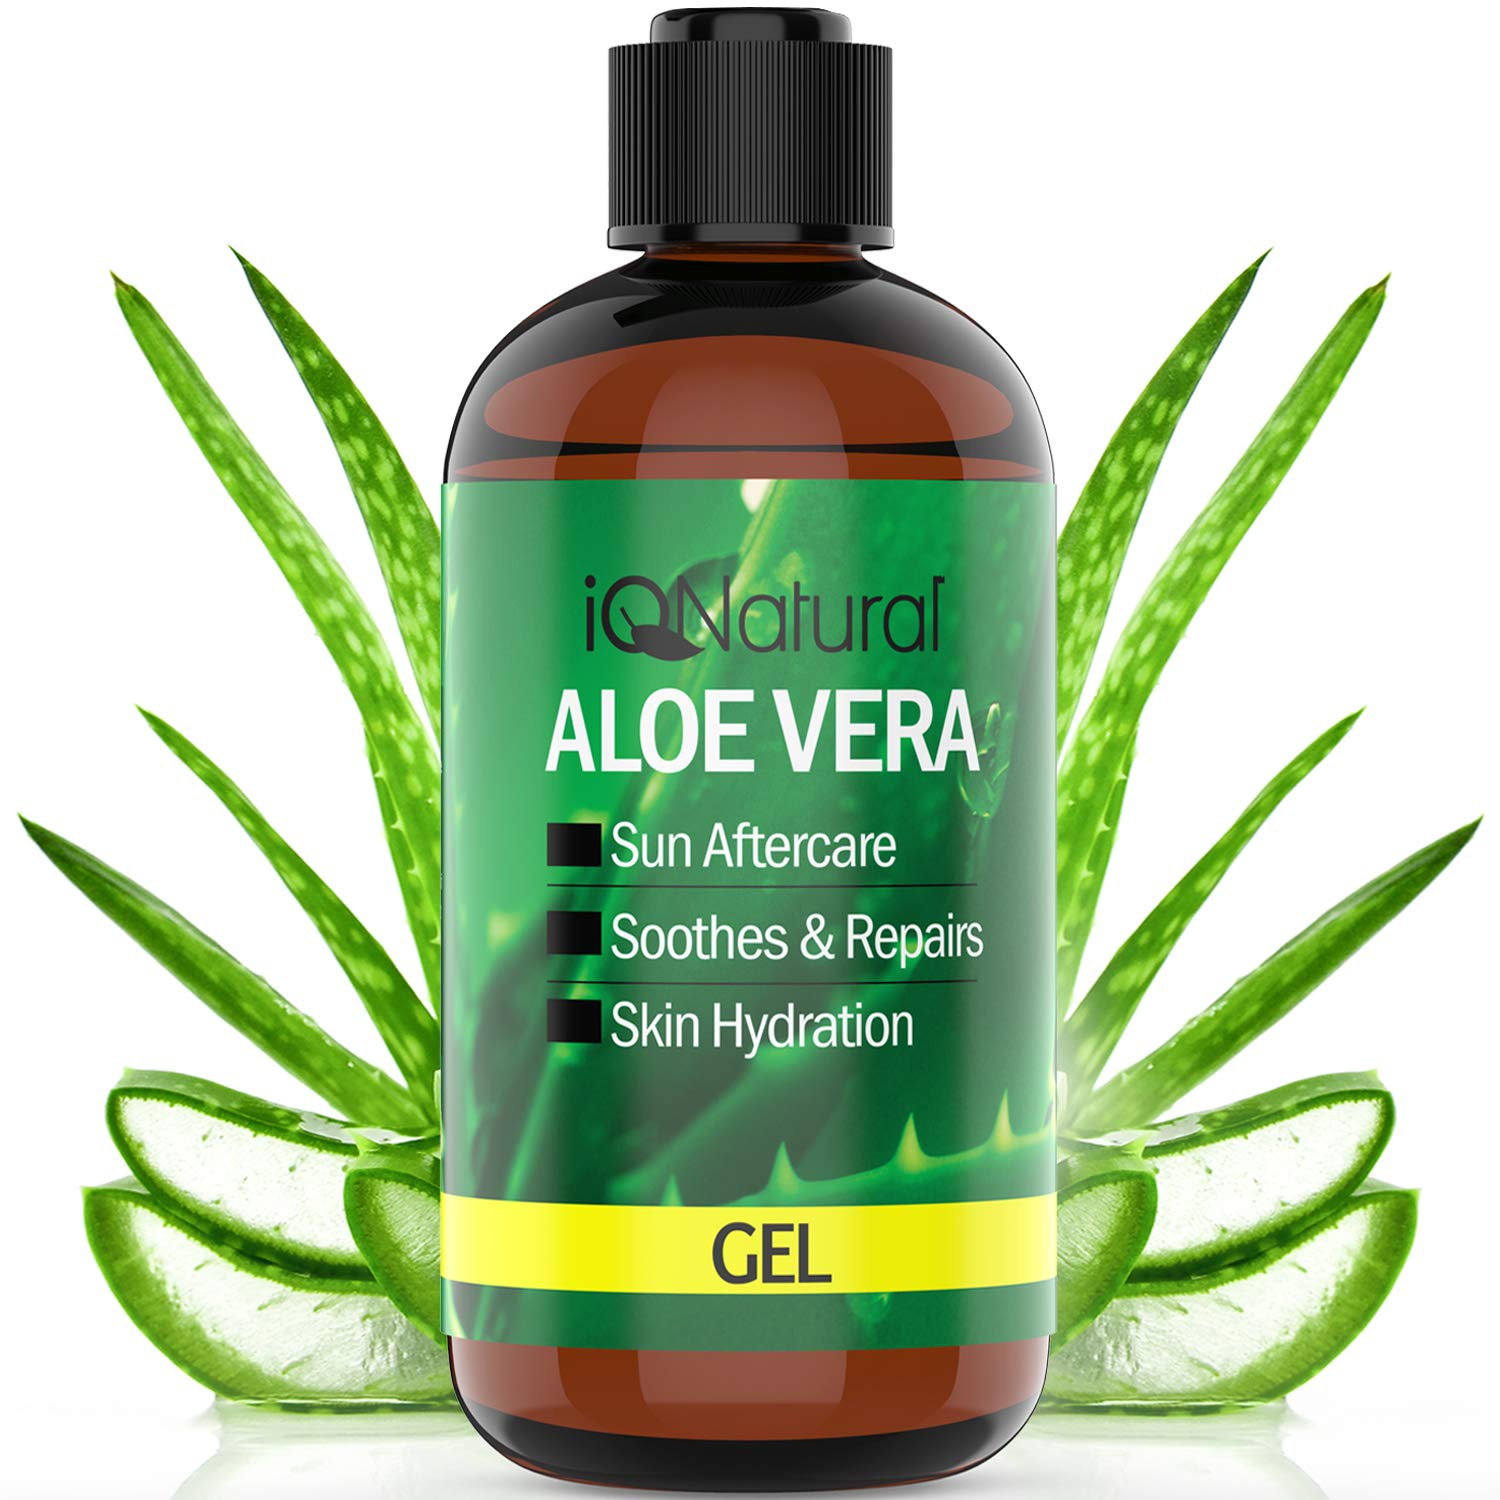 Iq Natural Organic Aloe Vera Gel Ingredients Explained 7011